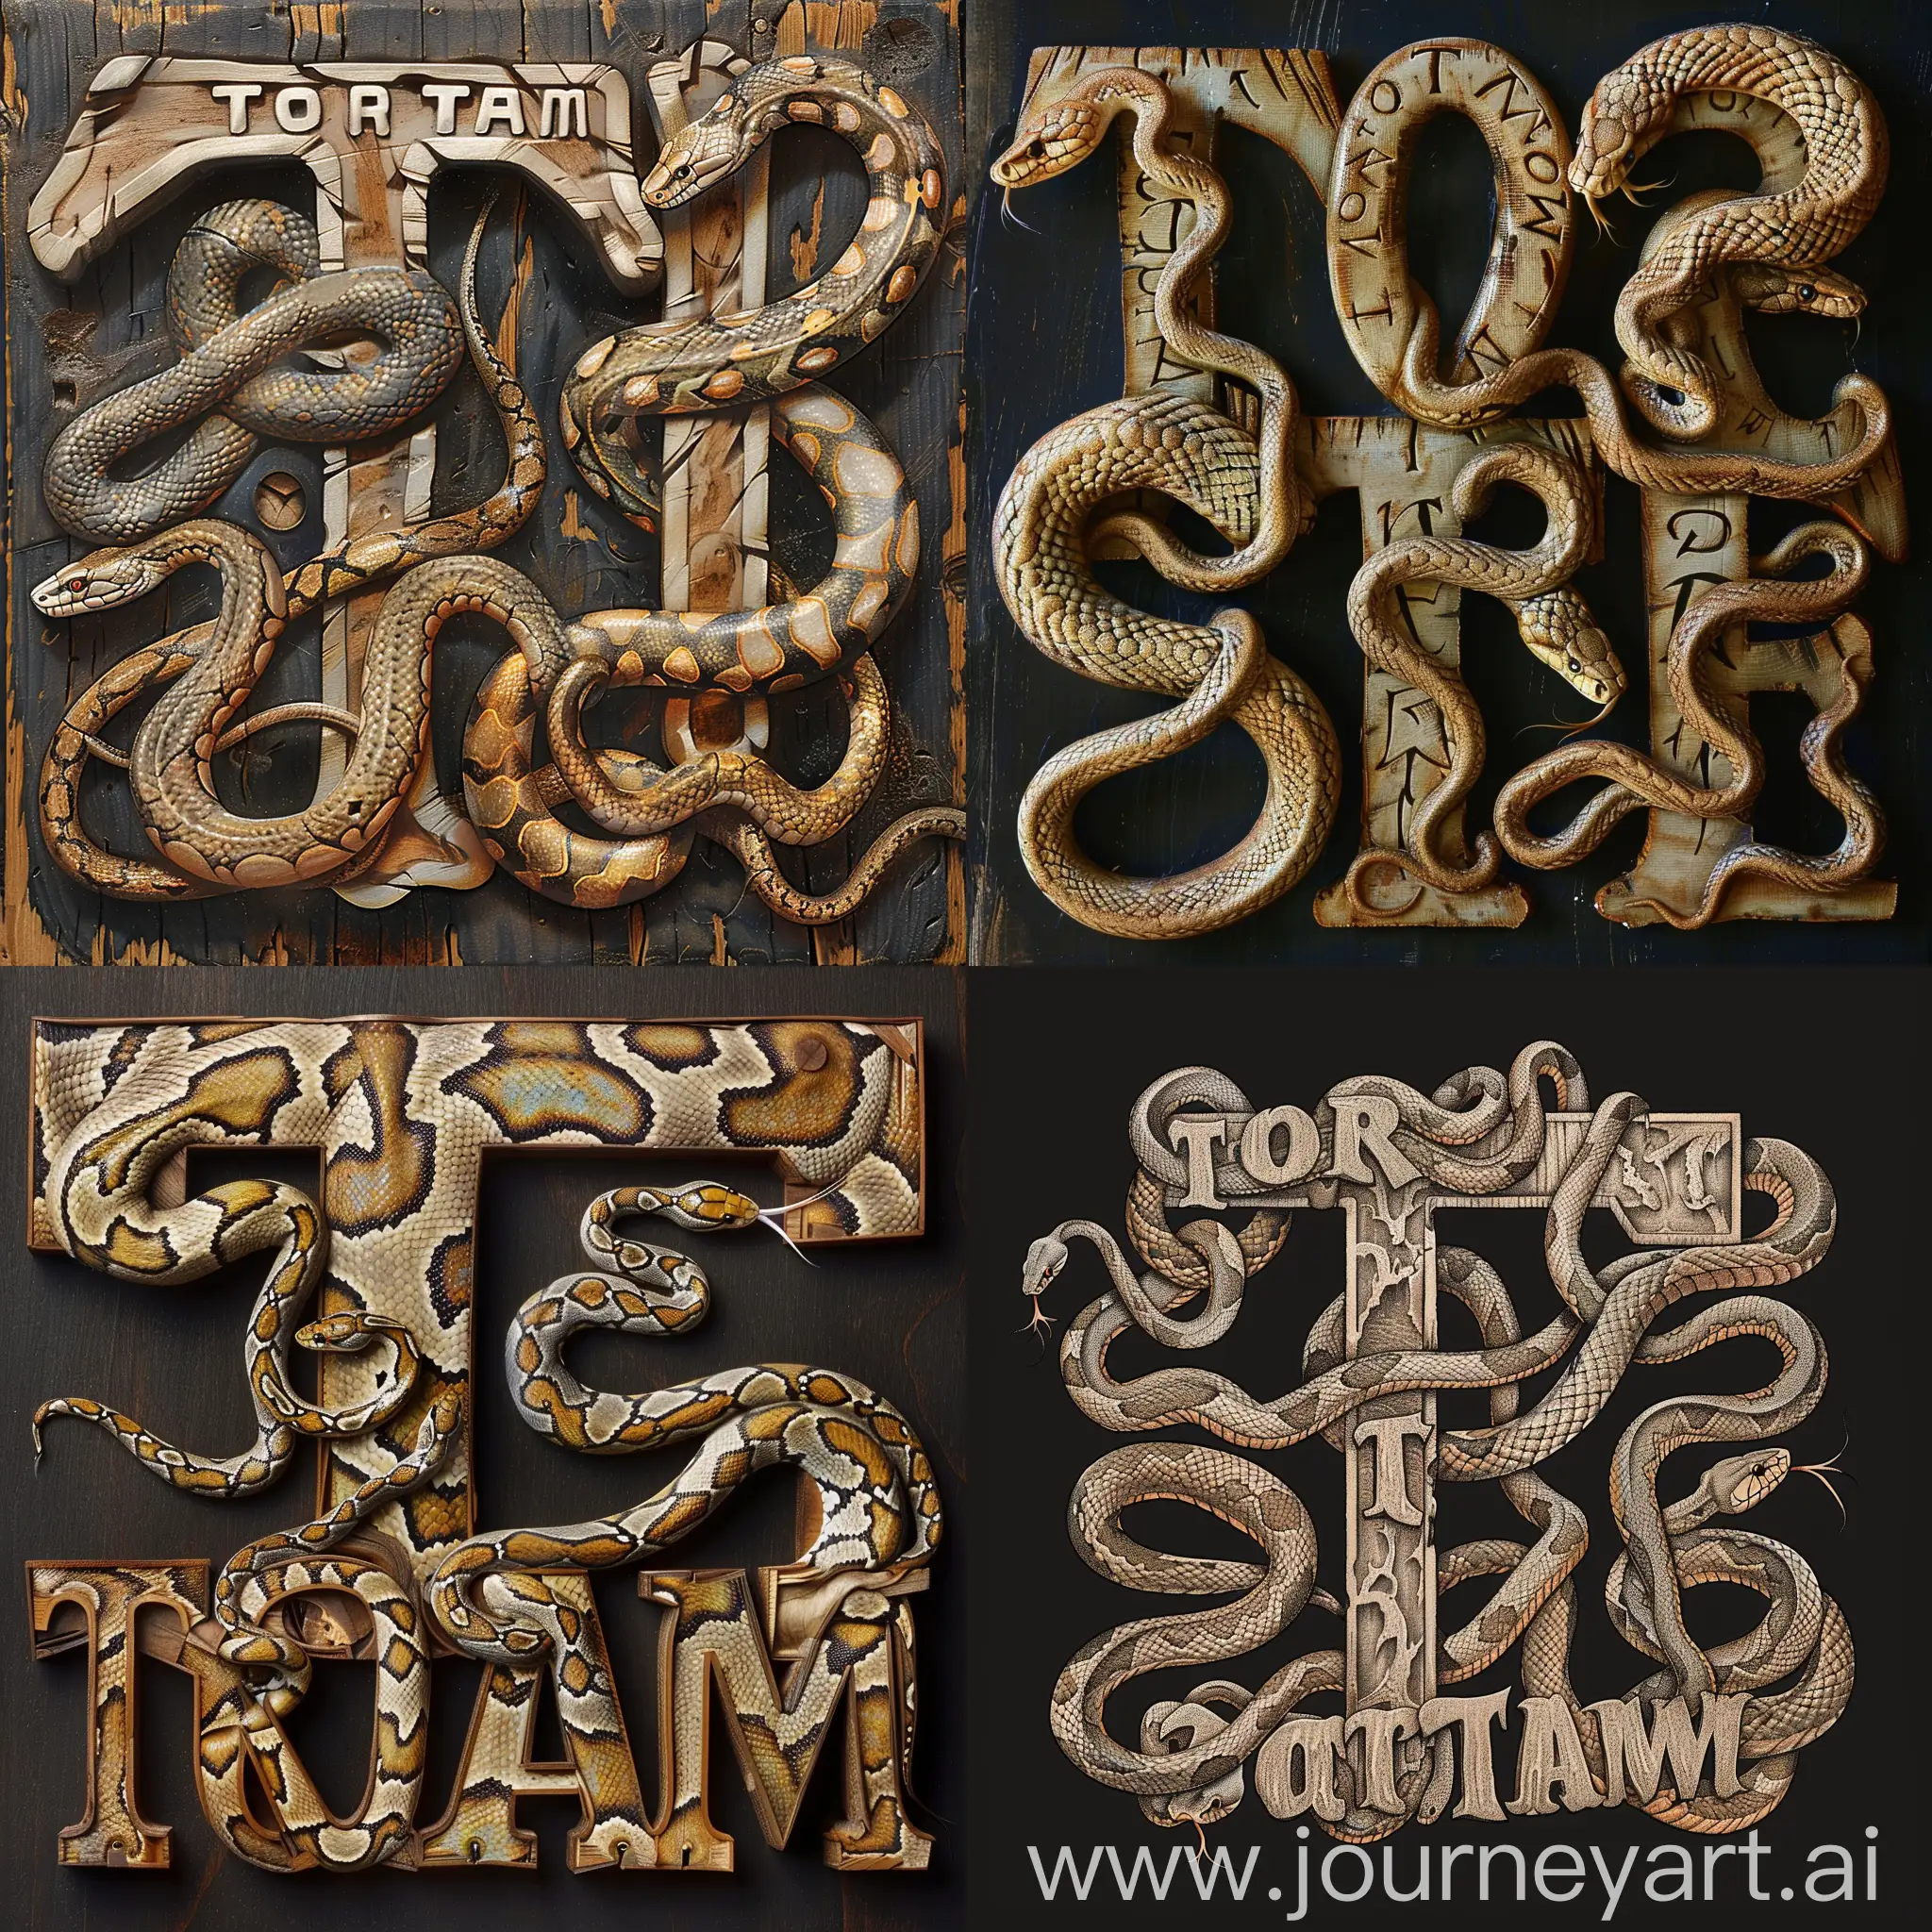 Elegant-TorTam-Typography-with-Intertwining-Snakes